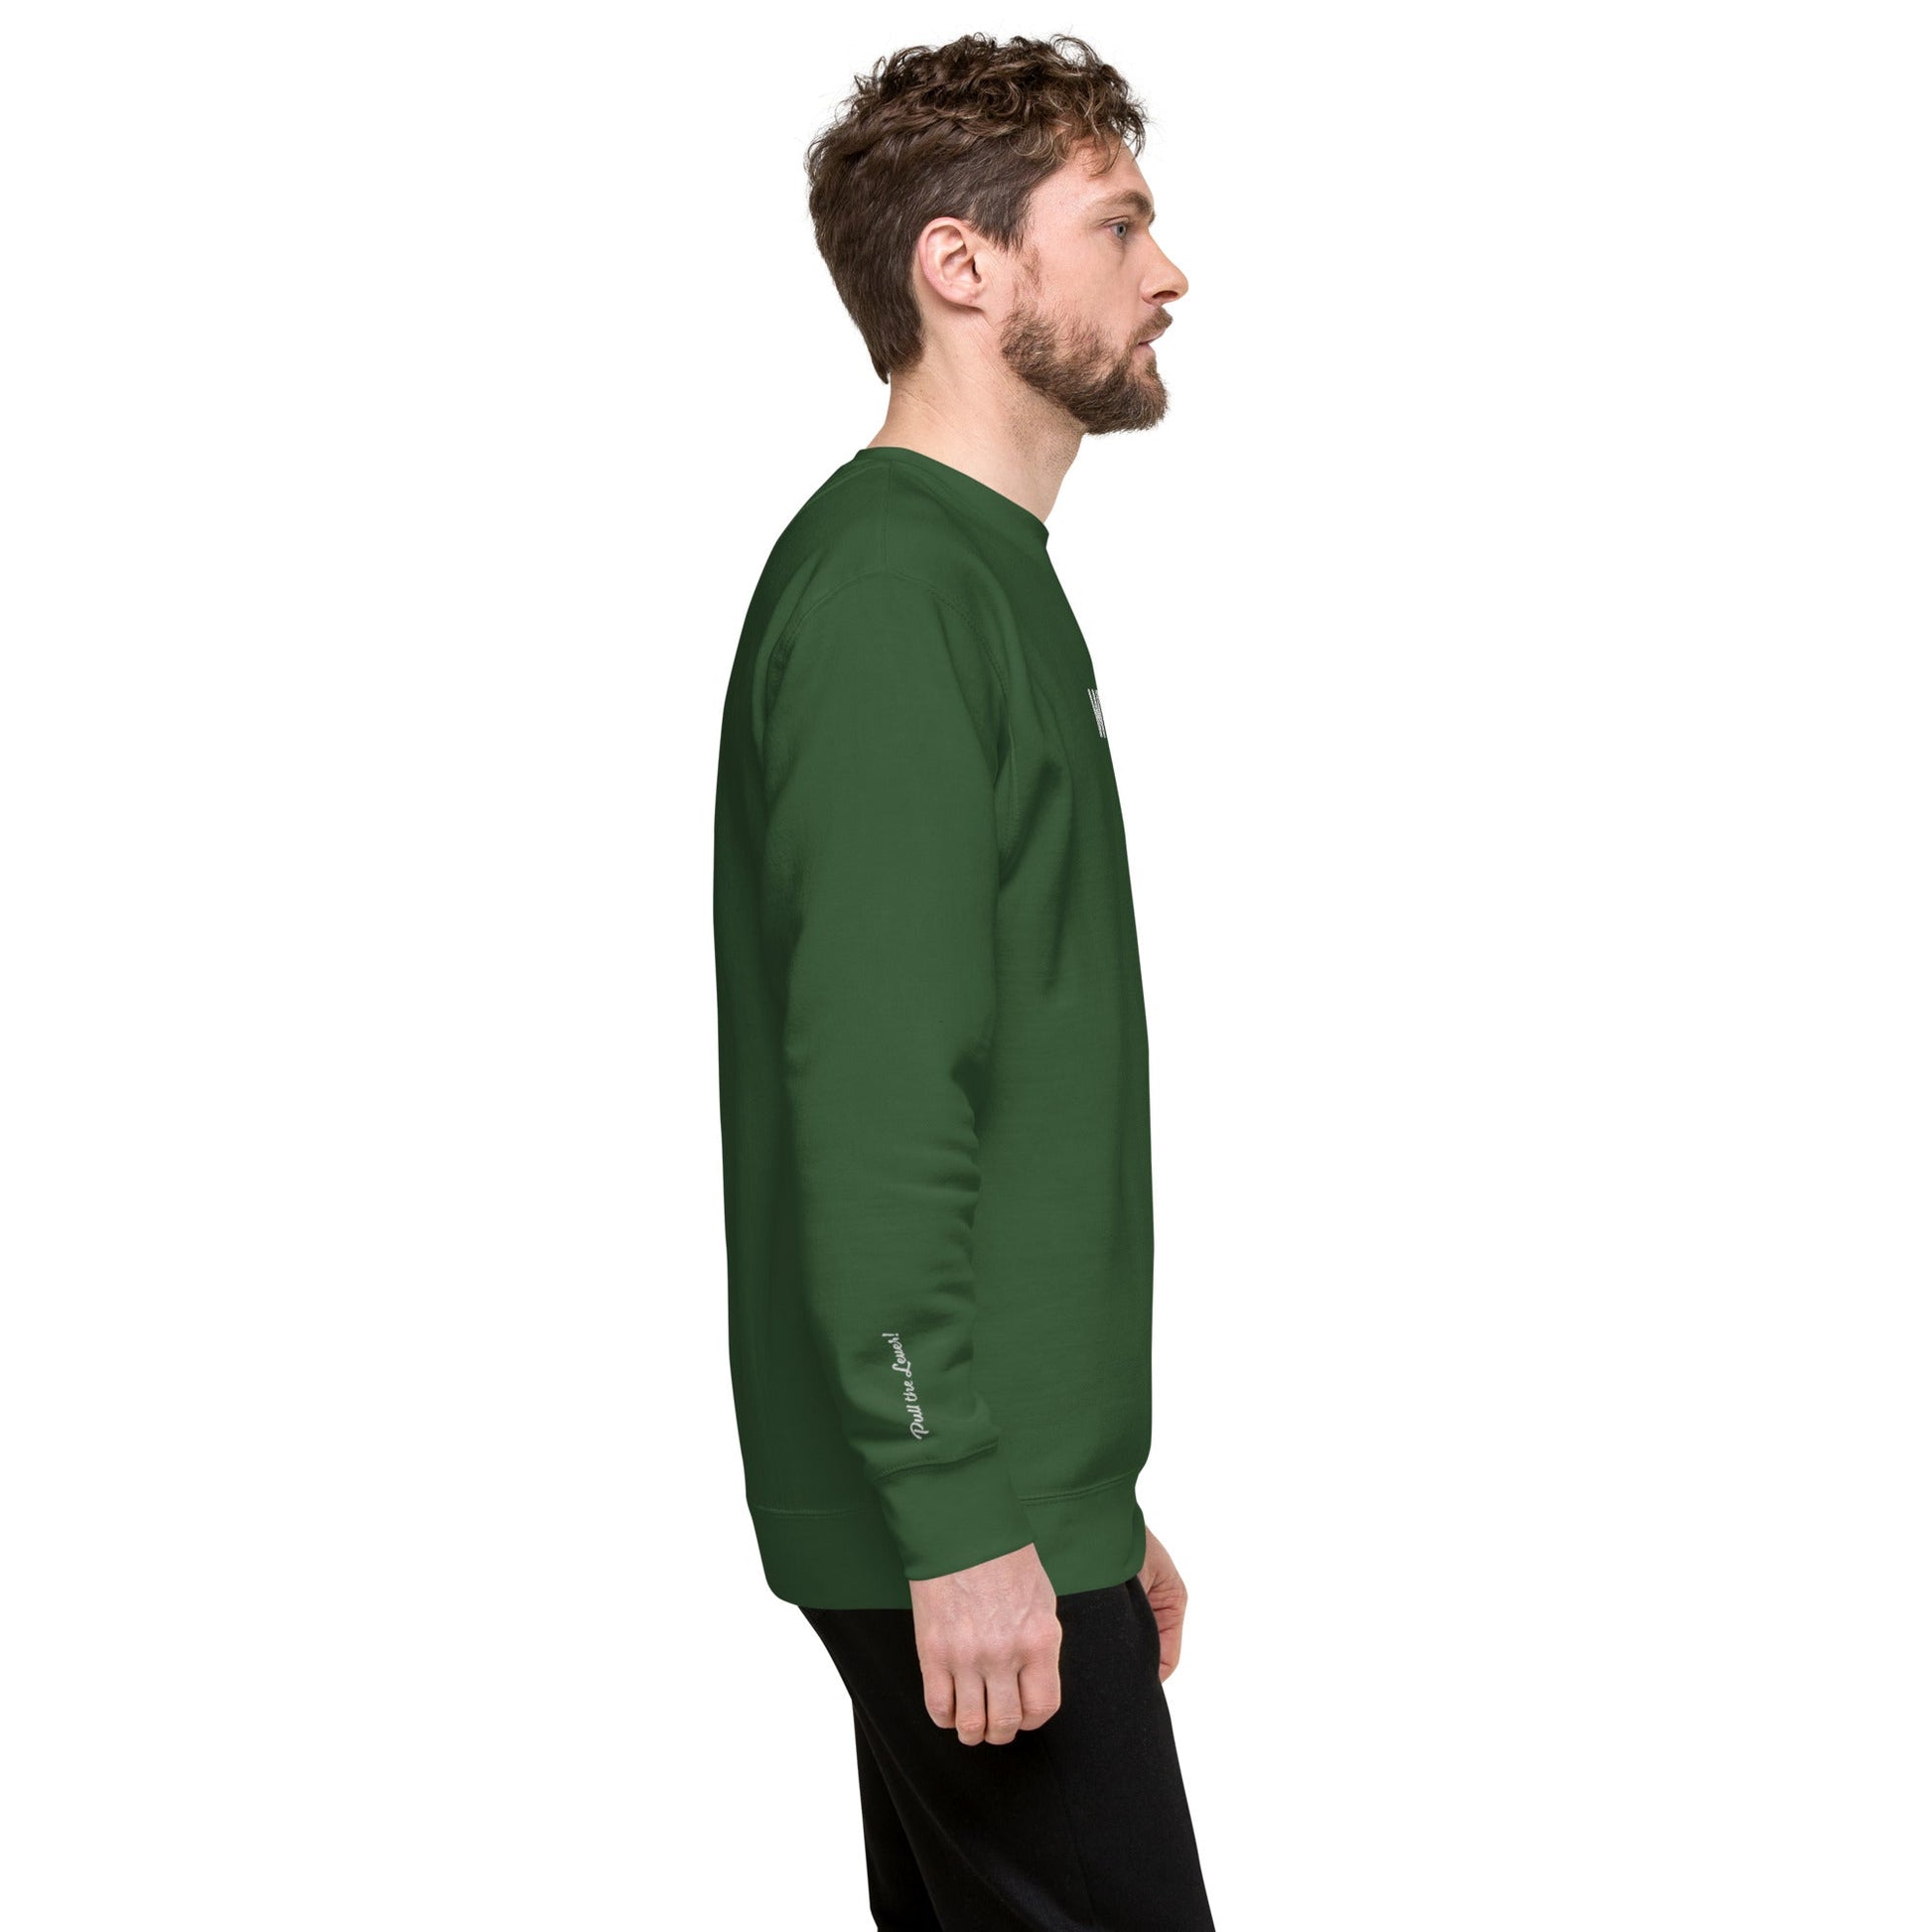 Wrong Lever Unisex Premium Sweatshirt adult sweatshirtclothing brandAdult T-ShirtWrong Lever Clothing